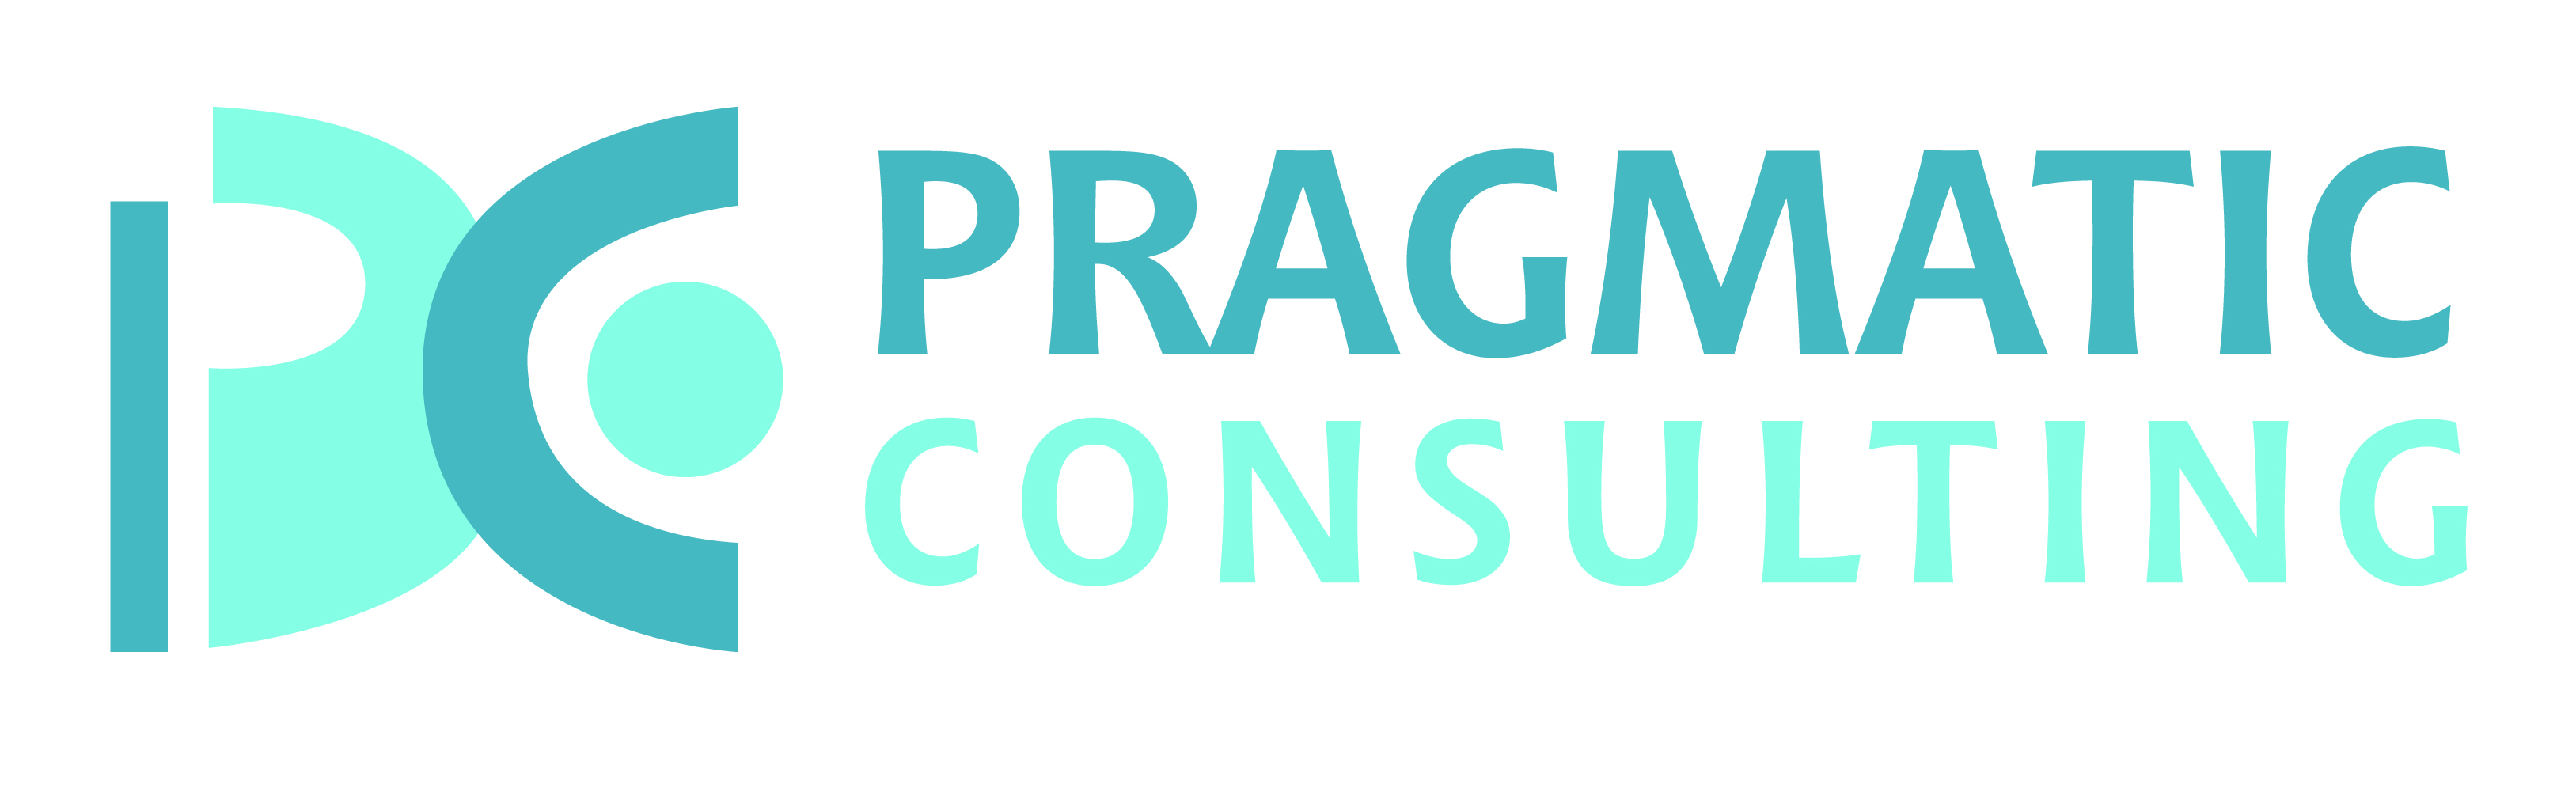 Pragmatic Consulting Logo